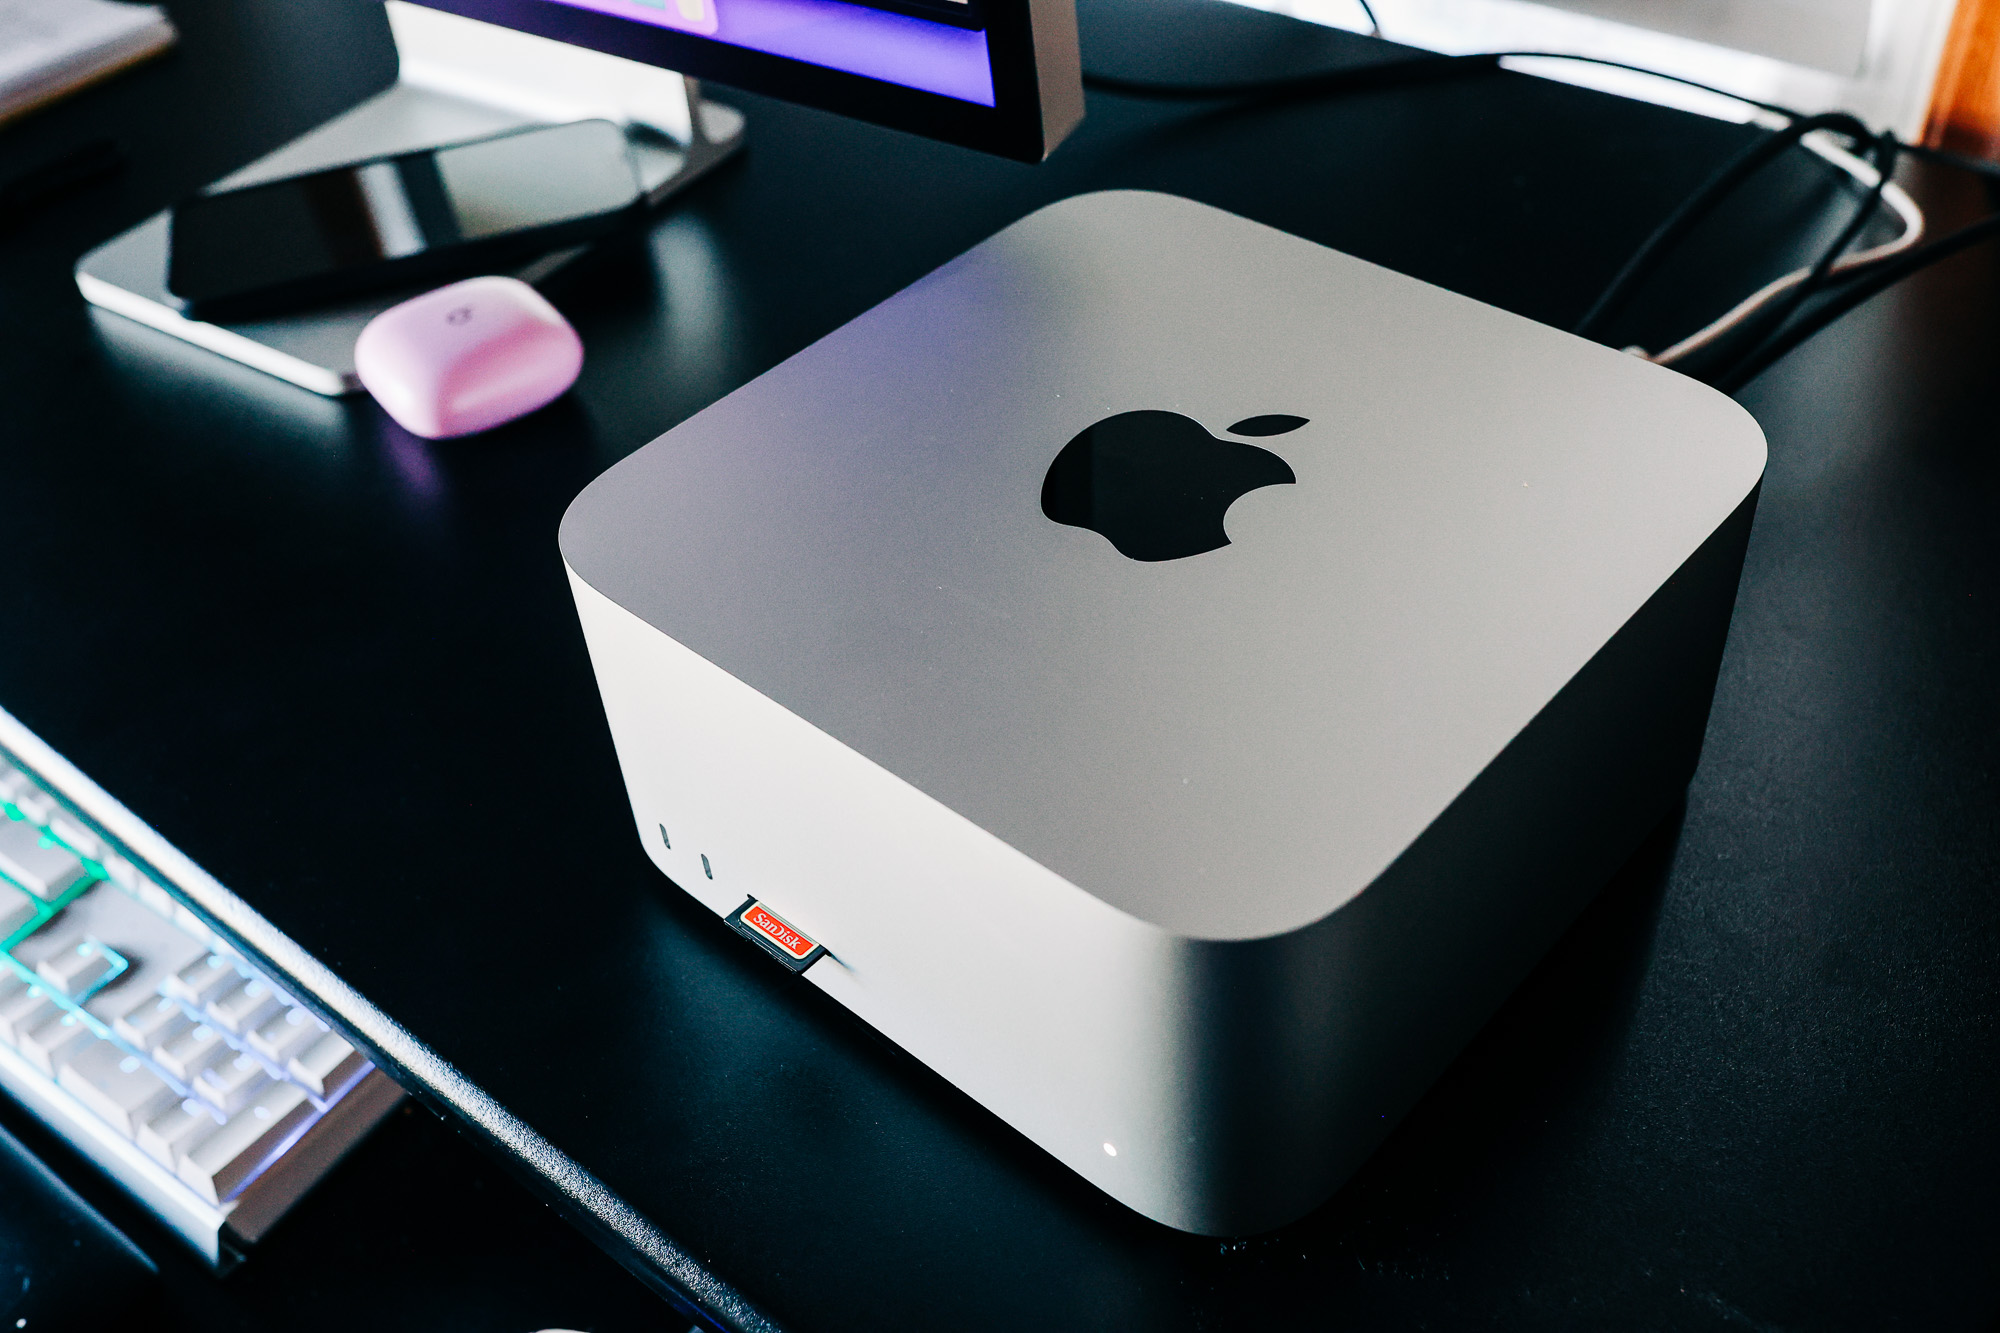 Mac Studio sitting on a desk